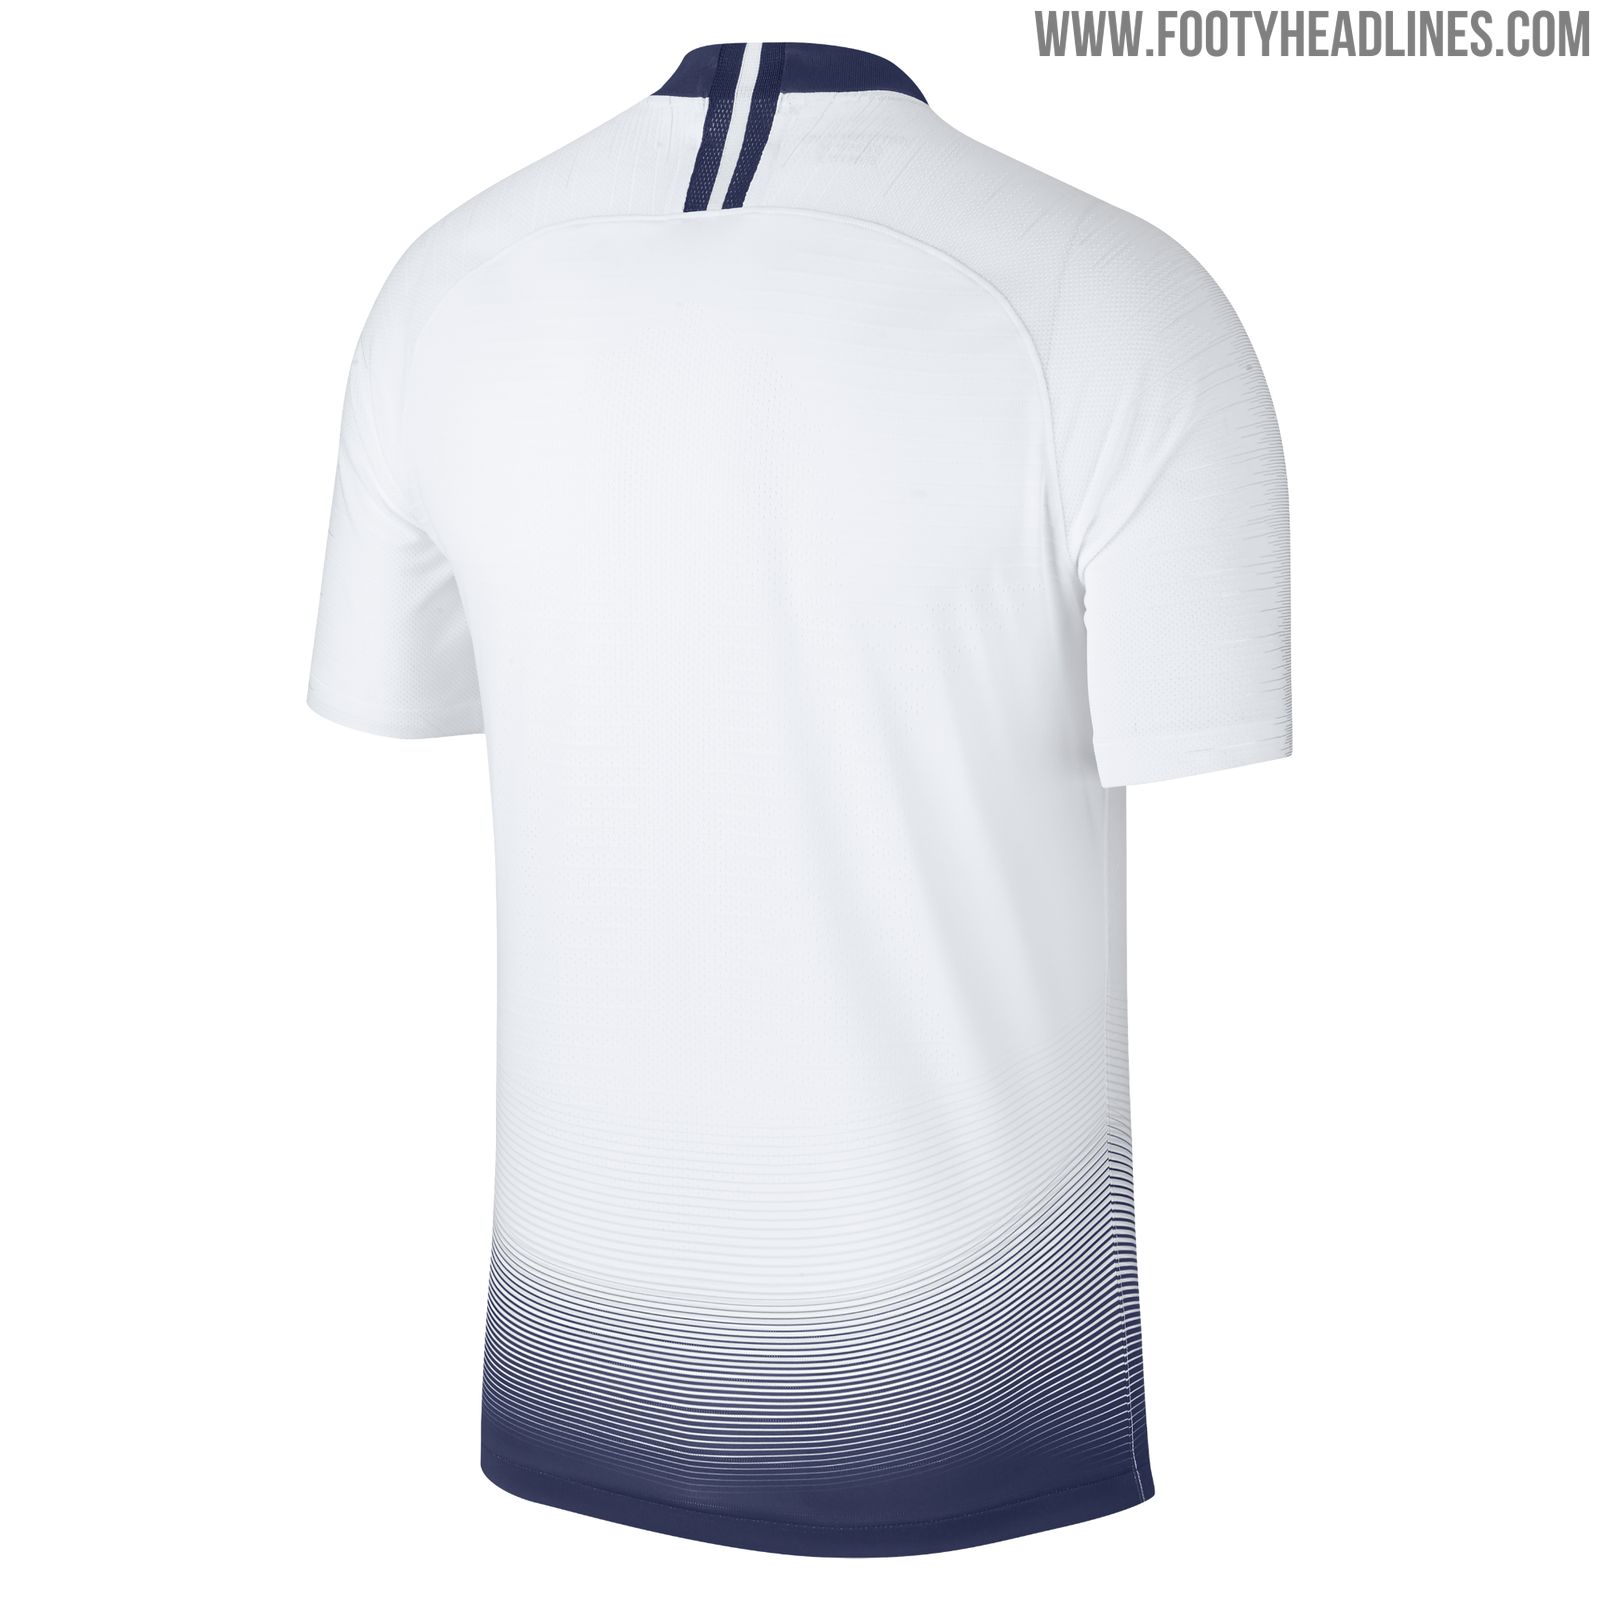 Nike Launch Tottenham Hotspur 18/19 Kits - SoccerBible